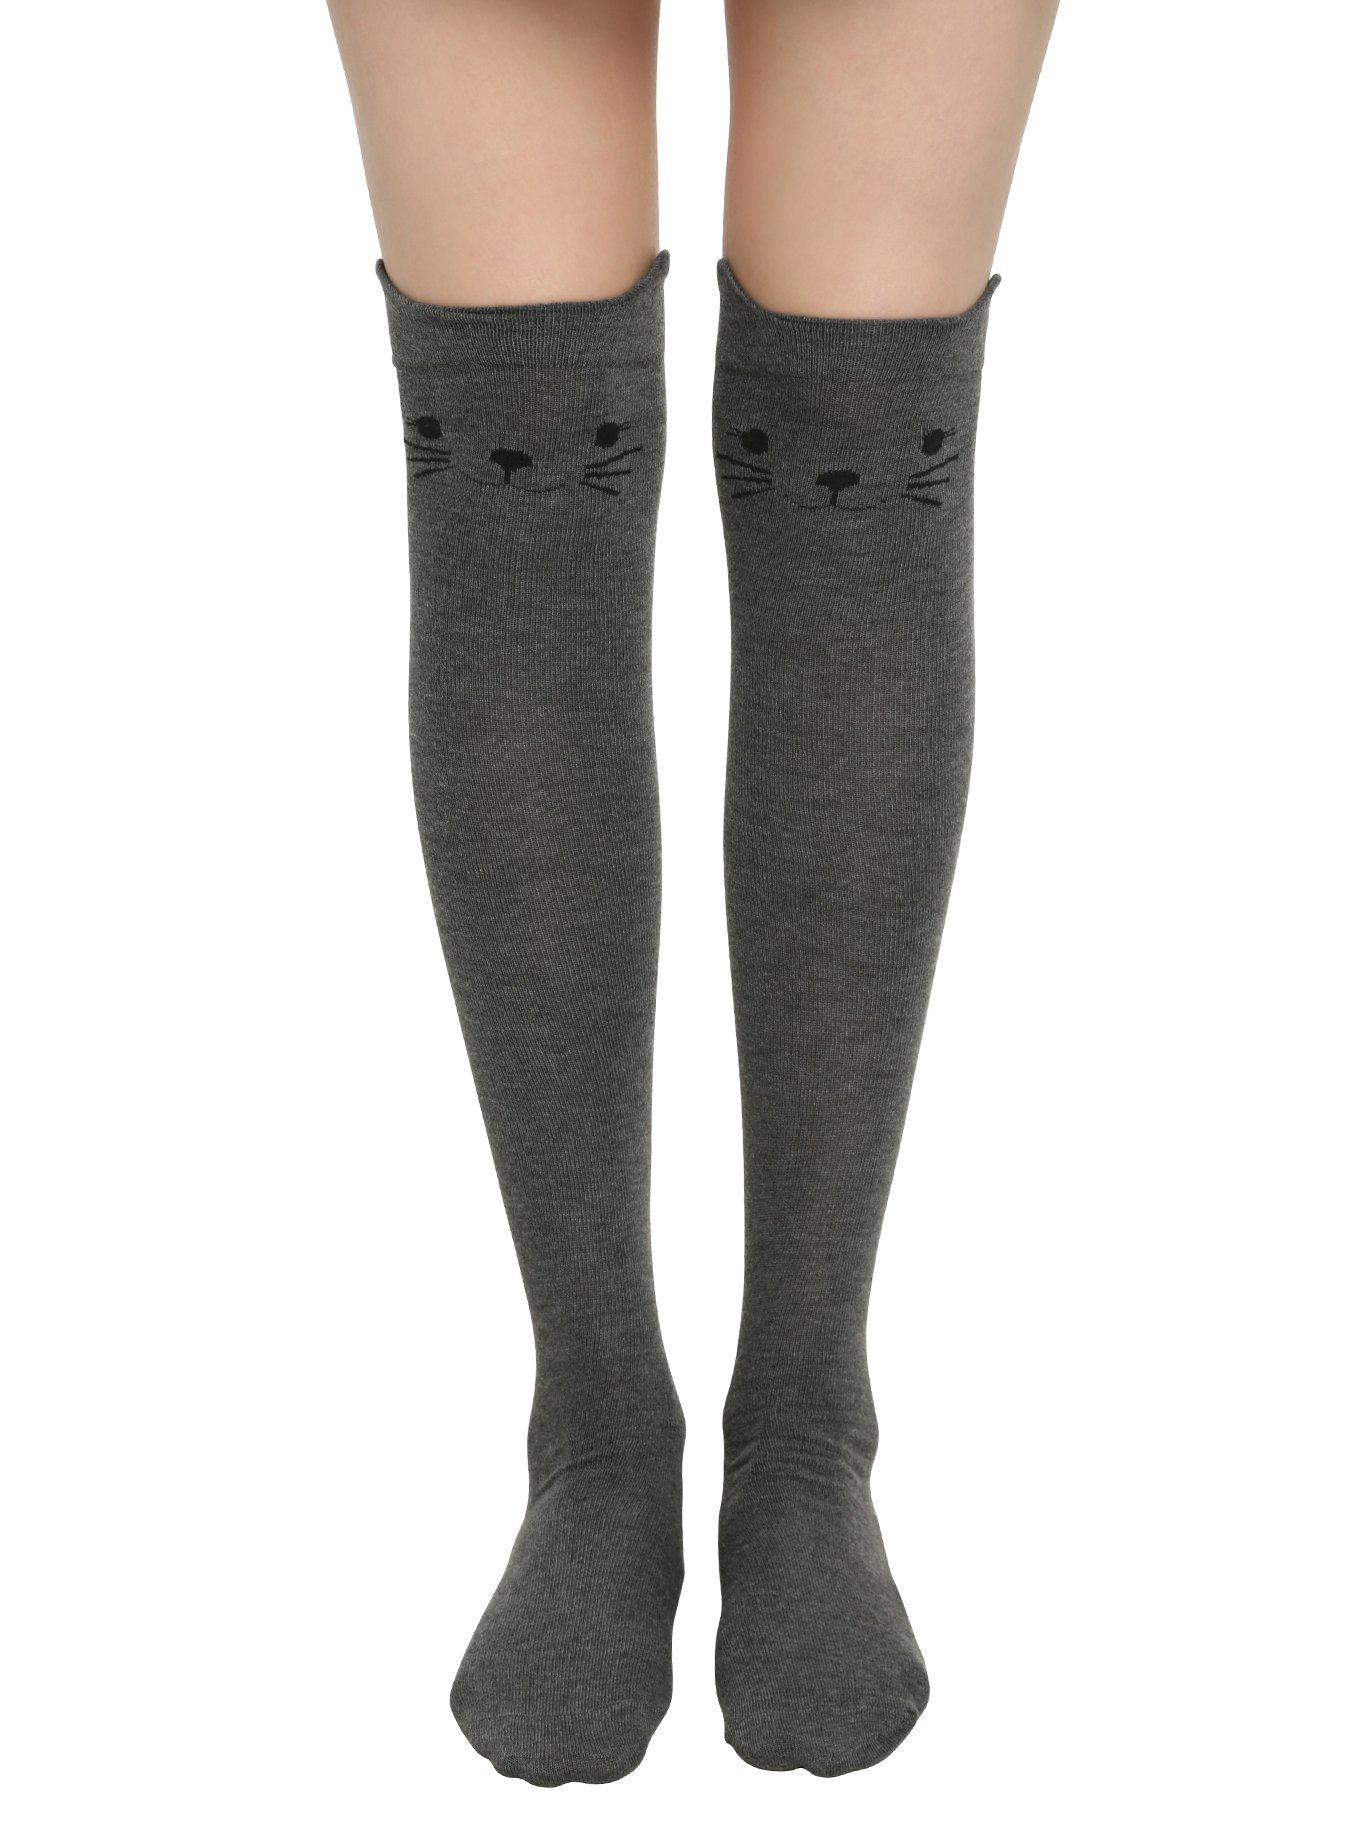 Blackheart Grey Kitty Over-The-Knee Socks, , hi-res